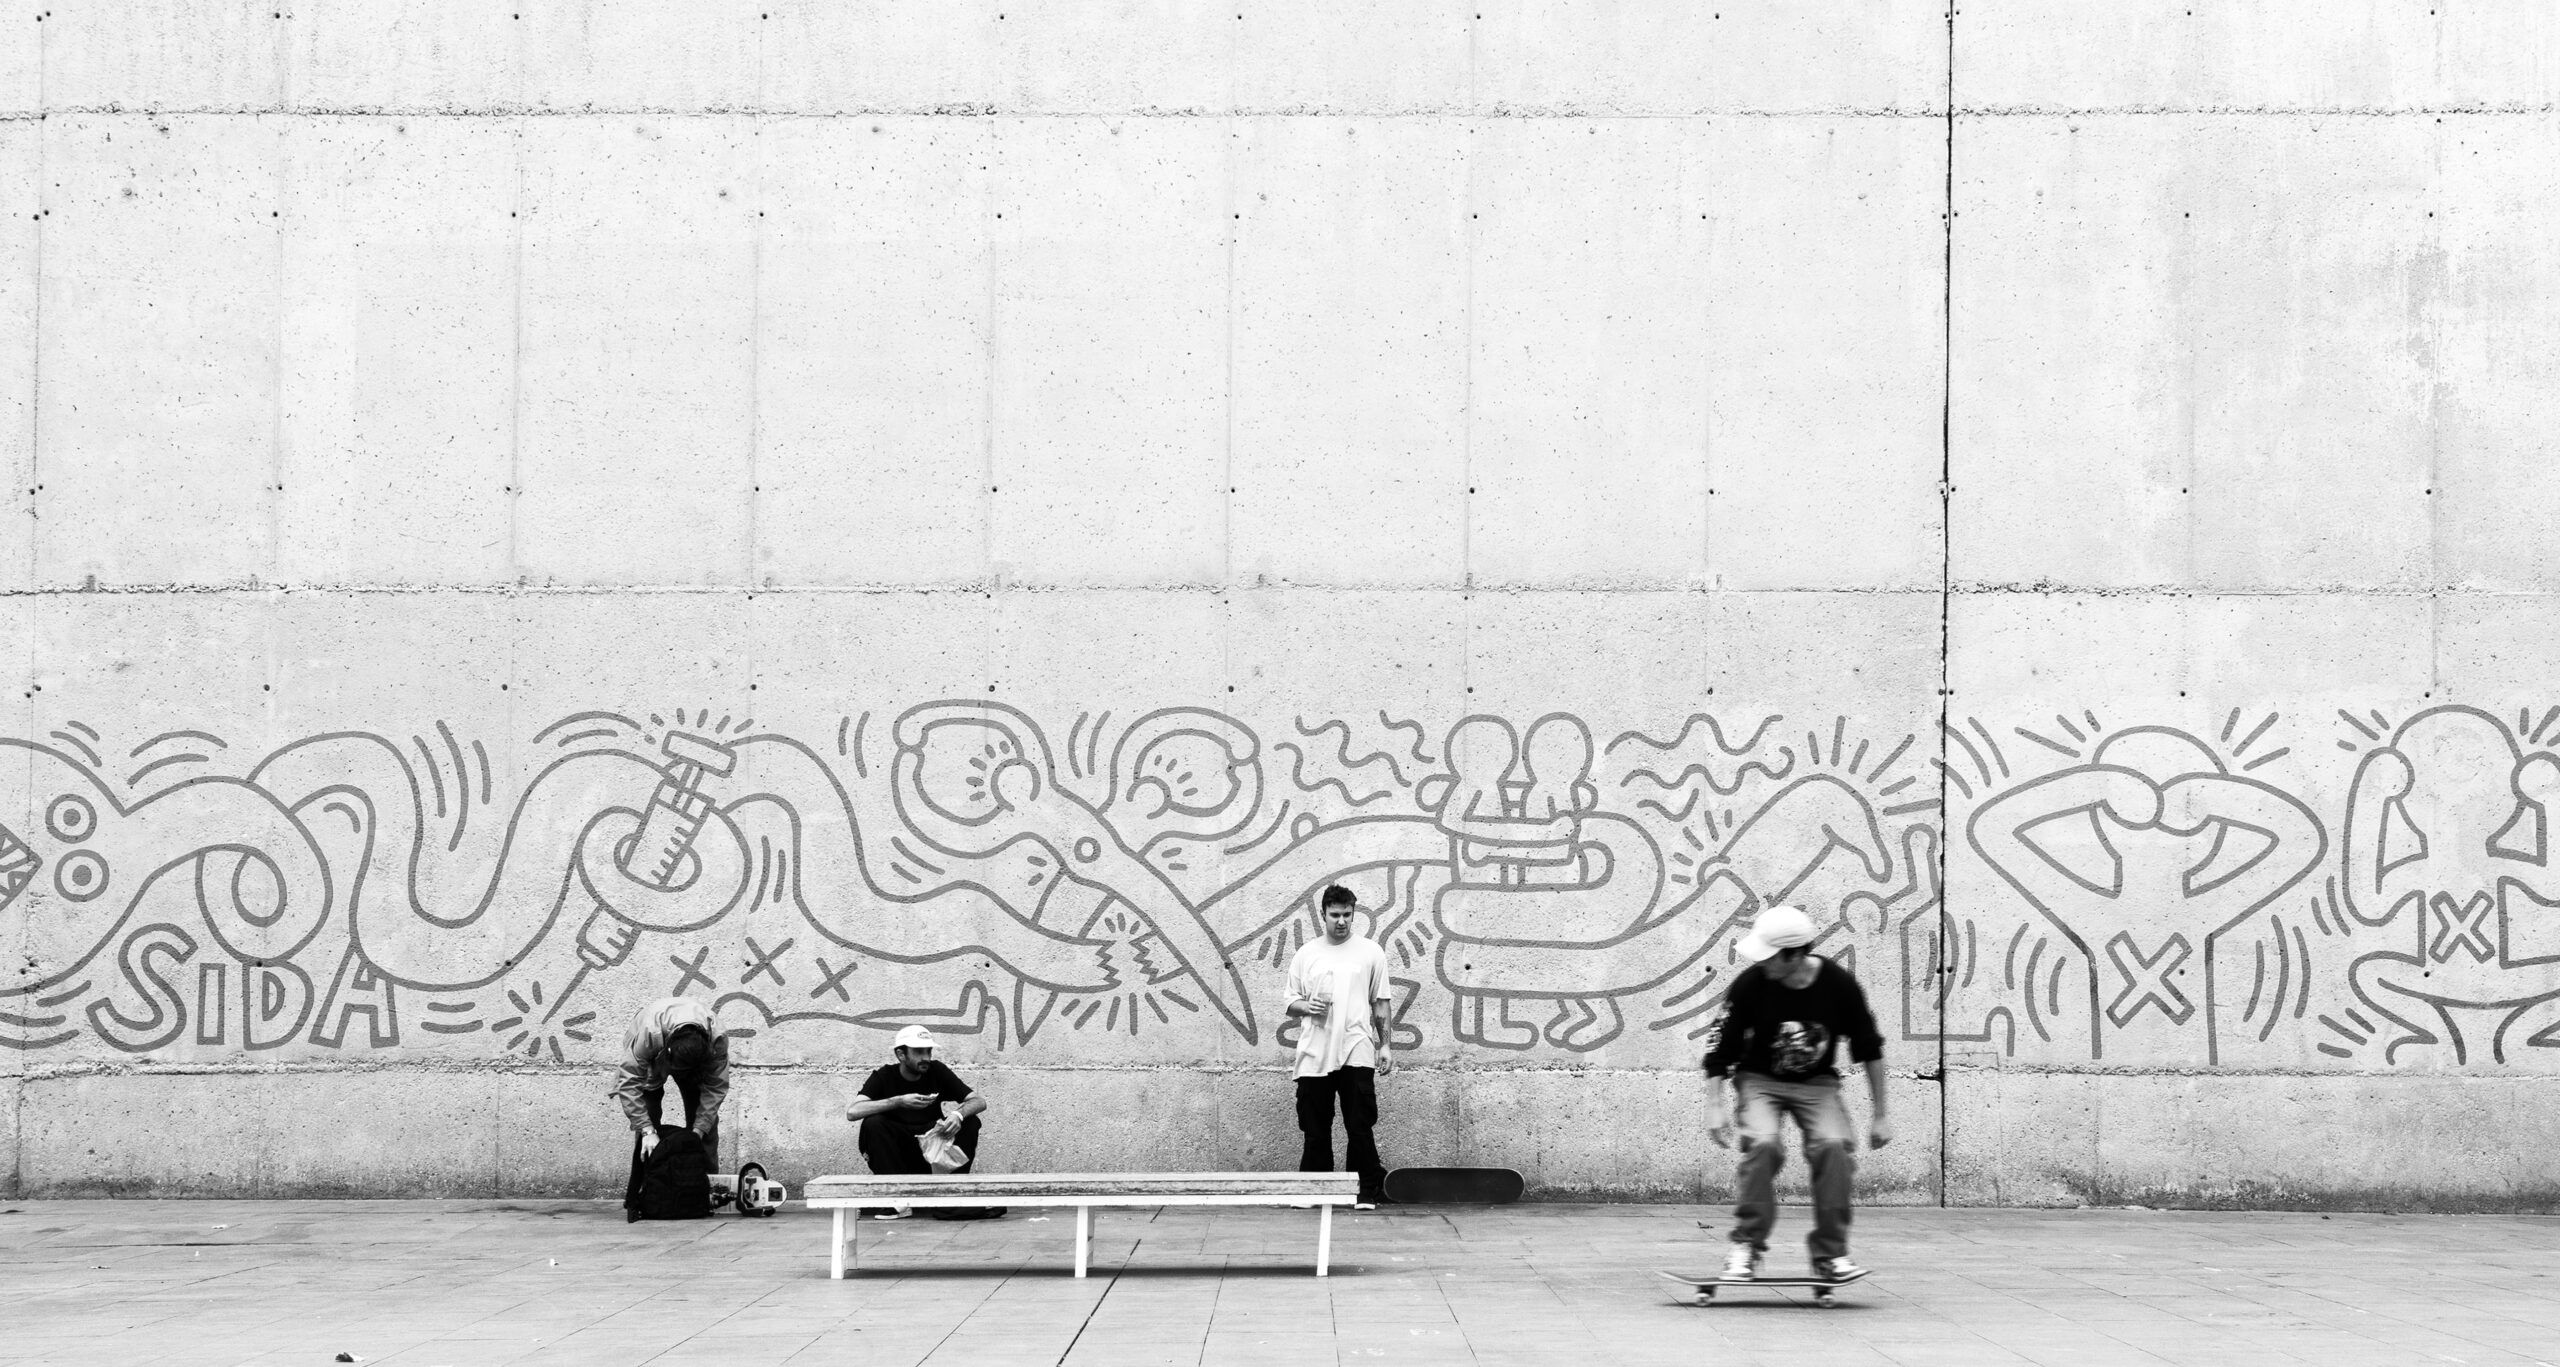 LGBTQ+ history month spotlight on Keith Haring: sharing his